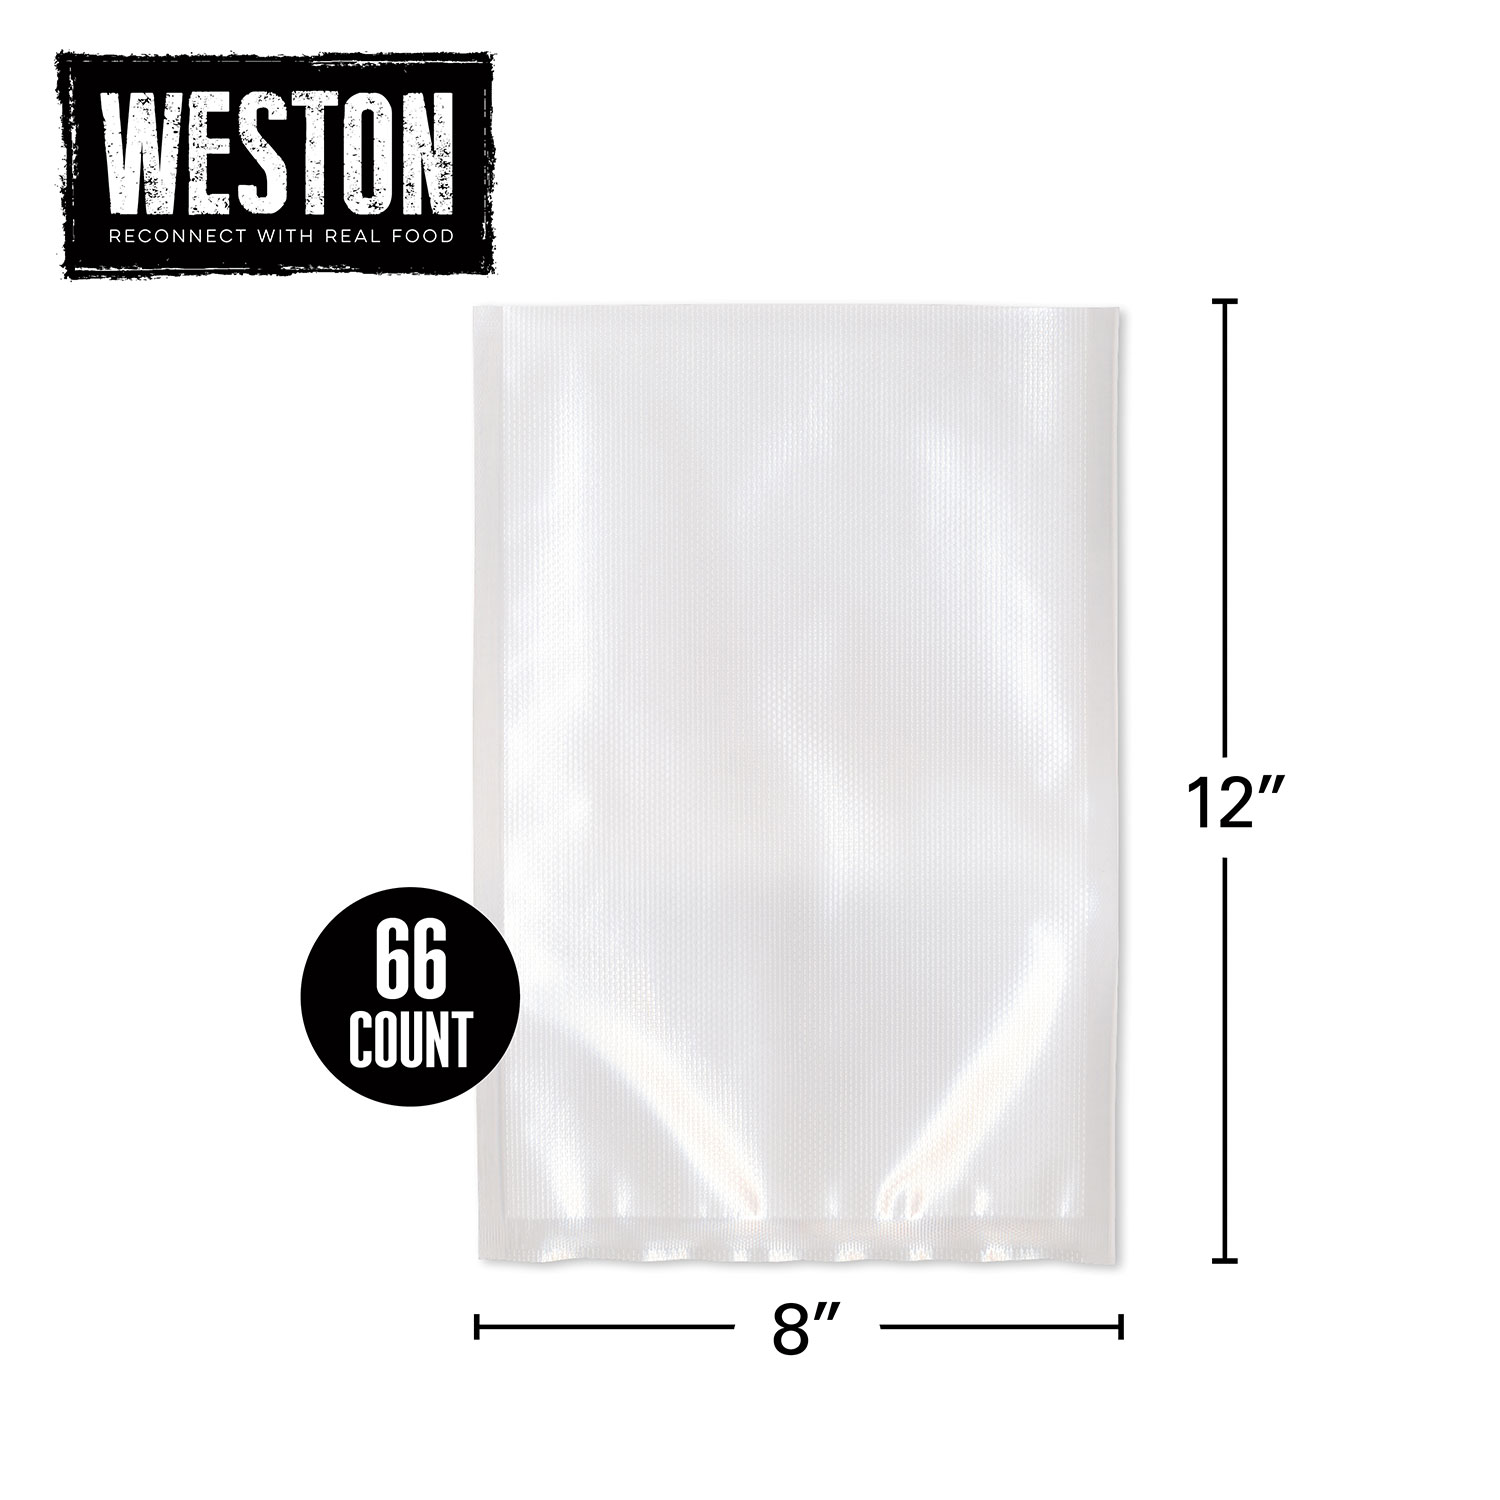 Weston 15 in. x 18 in. XL Vacuum Sealer Bags (100-Count) 30-0105-W